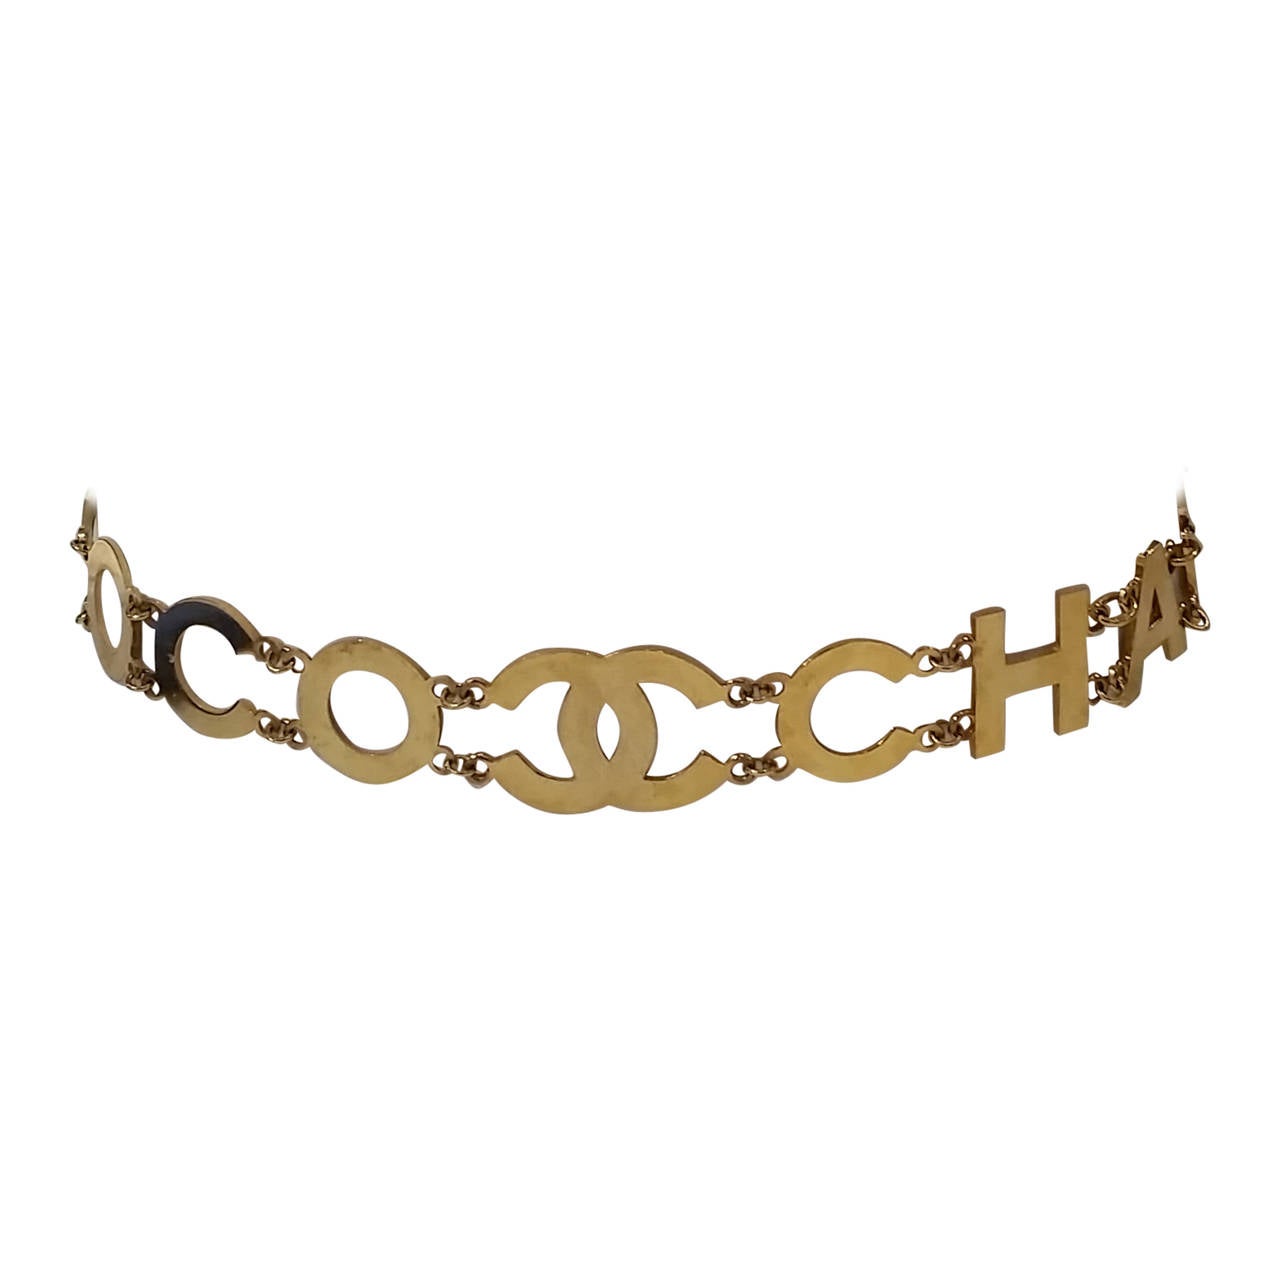 1980S Chanel Rare black and gold belt
Coco CC Chanel gold logo black belt